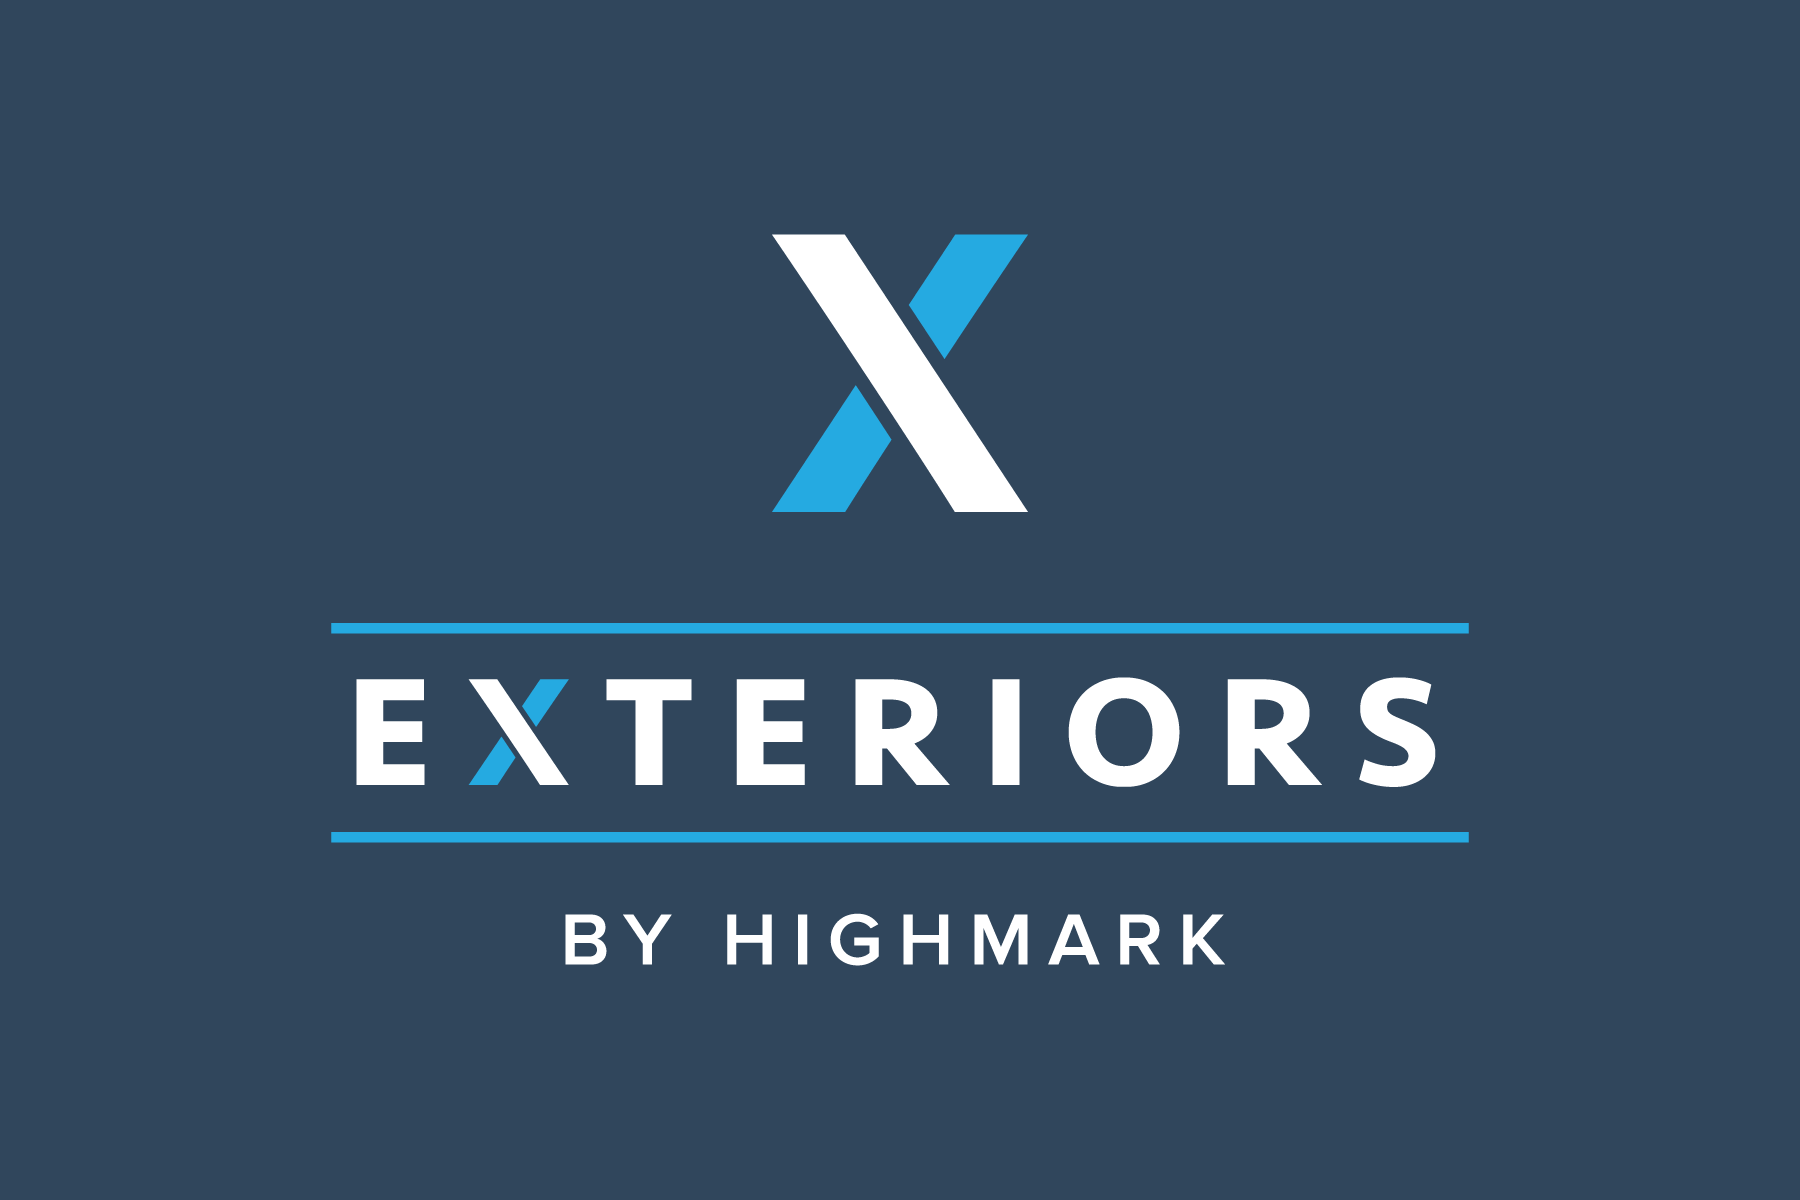 exteriors by highmark logo on dark blue